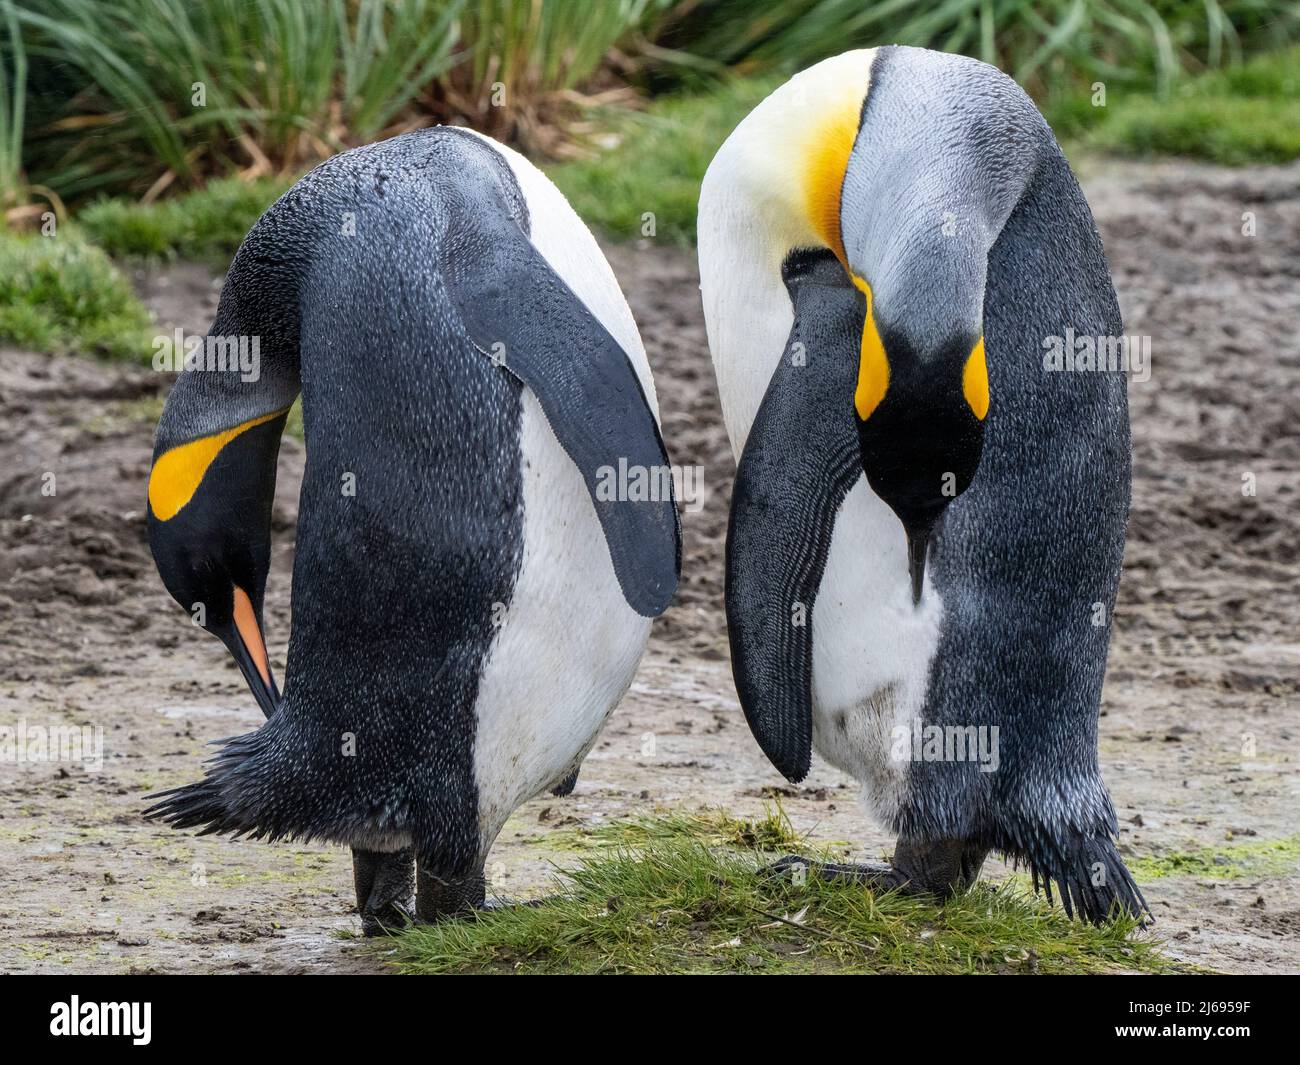 King penguins (Aptenodytes patagonicus) preening themselves at Salisbury Plain, South Georgia, South Atlantic, Polar Regions Stock Photo